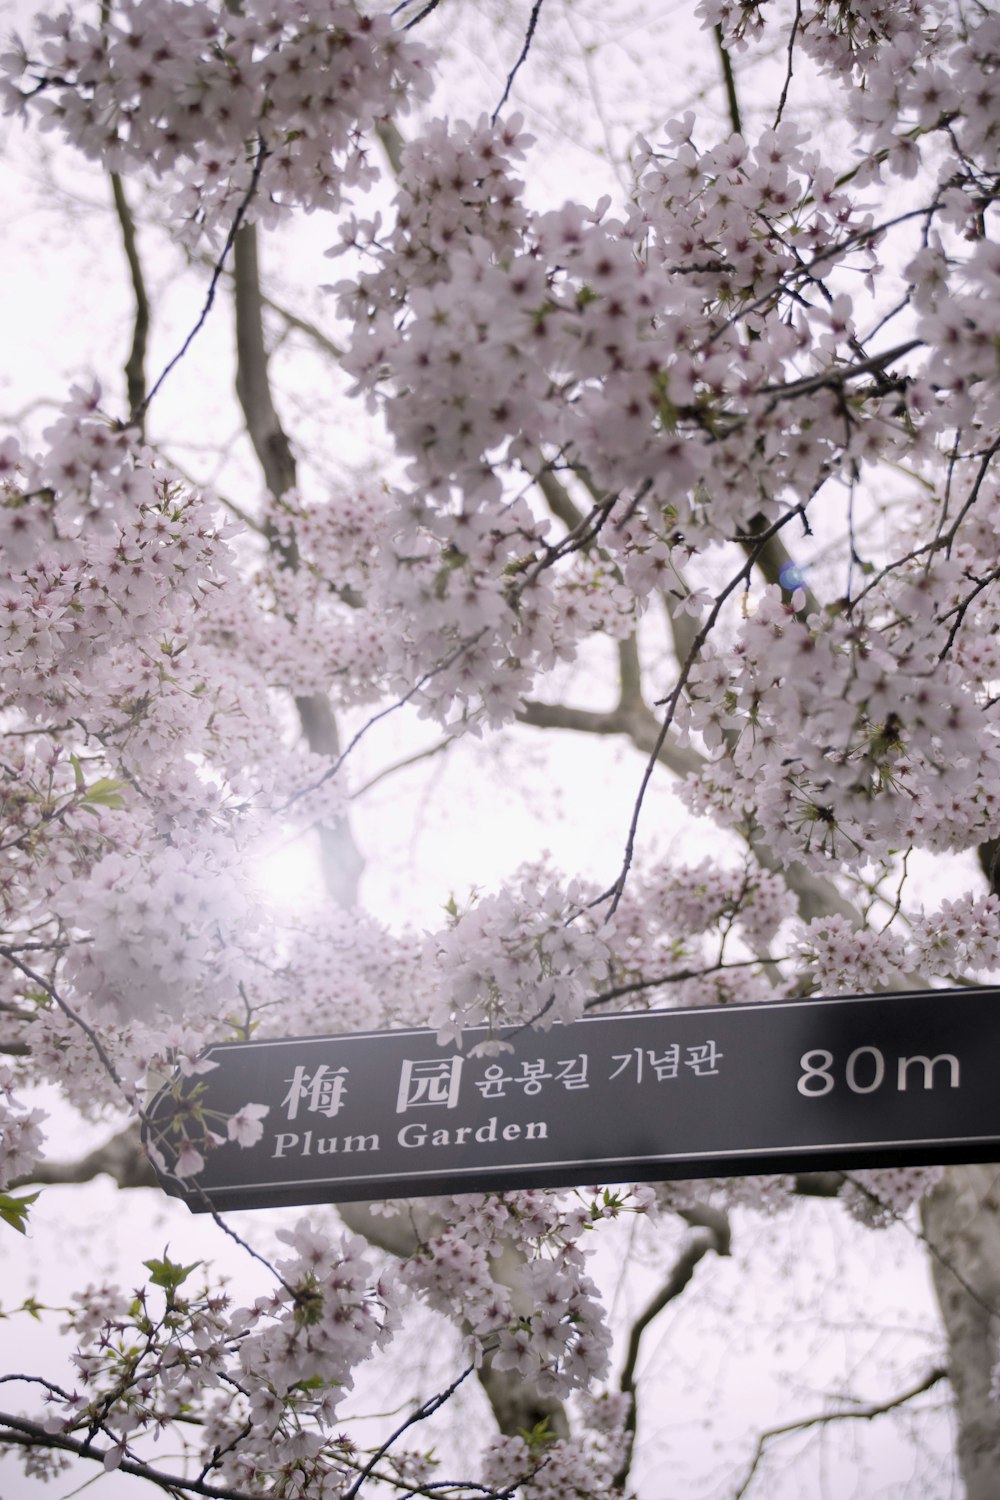 plum garden 80m signage